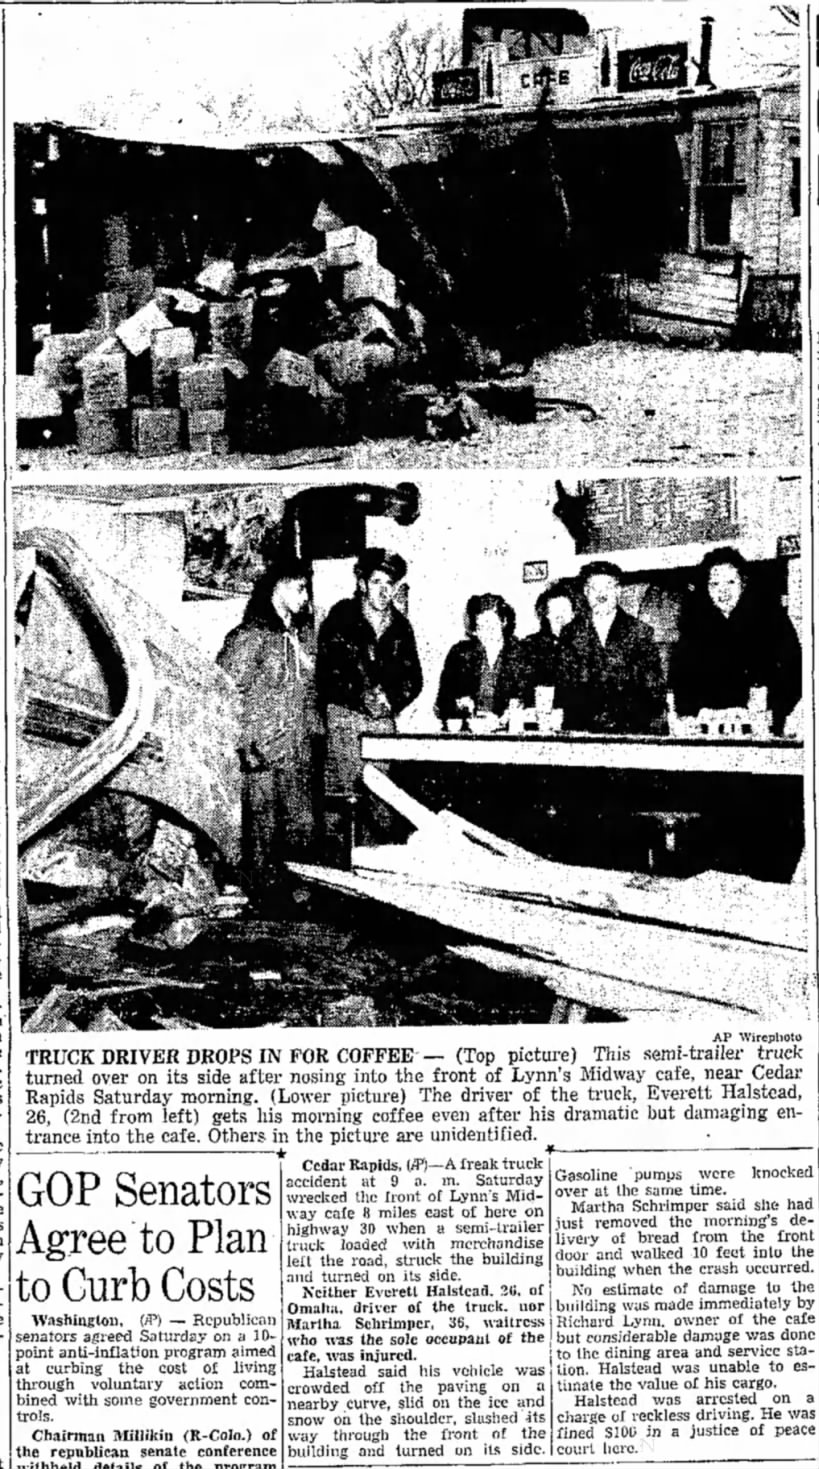 Accident near Cedar Rapids
December 13, 1947
Page 1, Columns 3 - 5